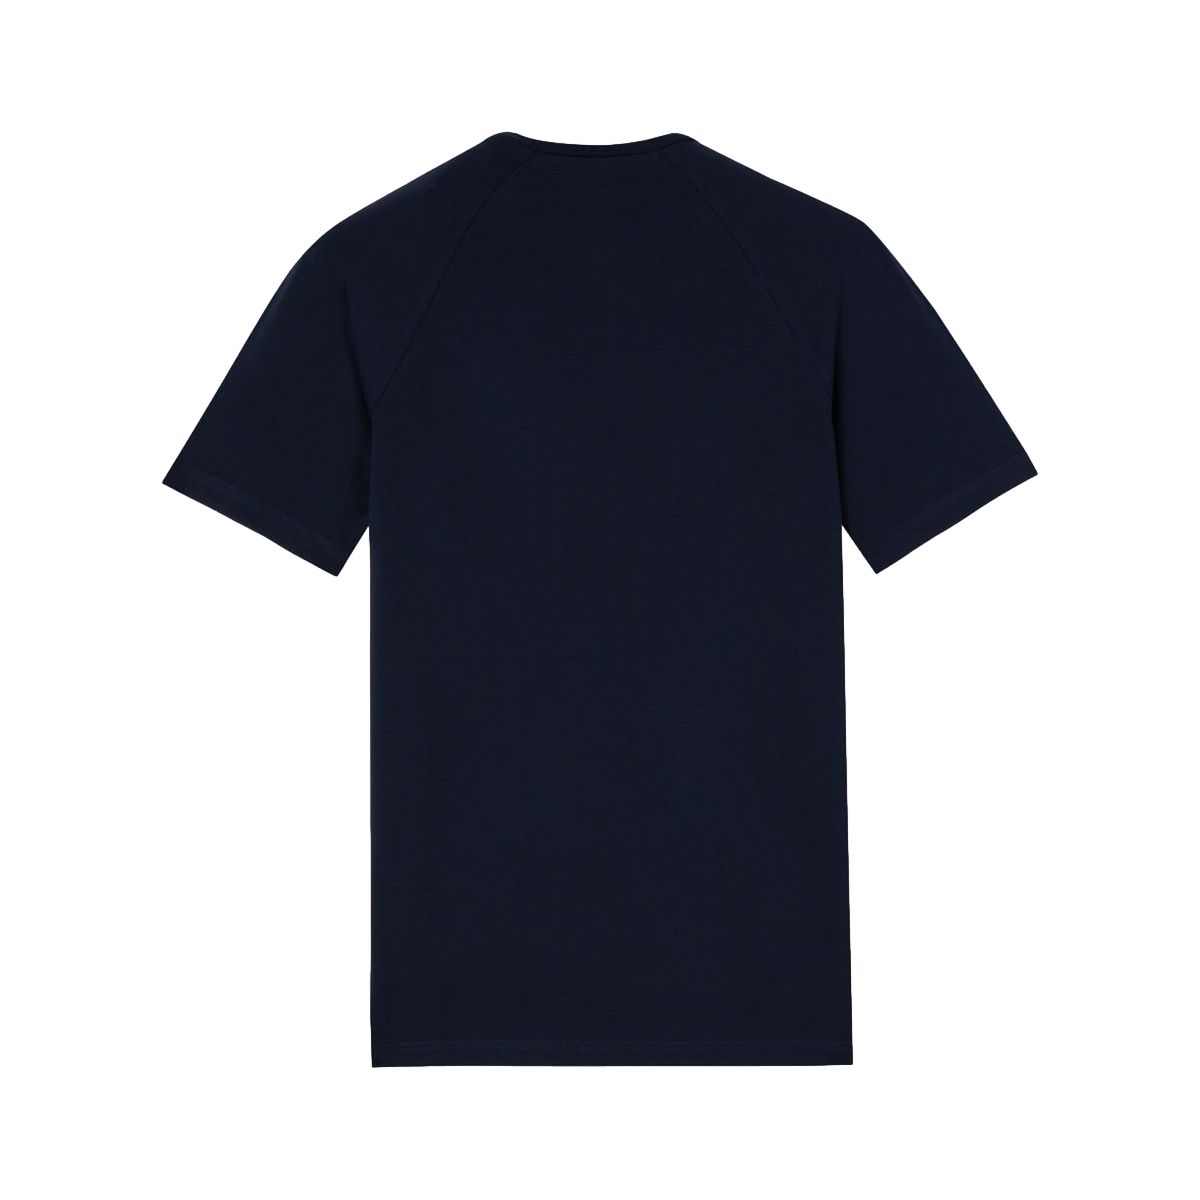 Tee-shirt Temp-IQ Bleu marine - Dickies - Taille 3XL 1